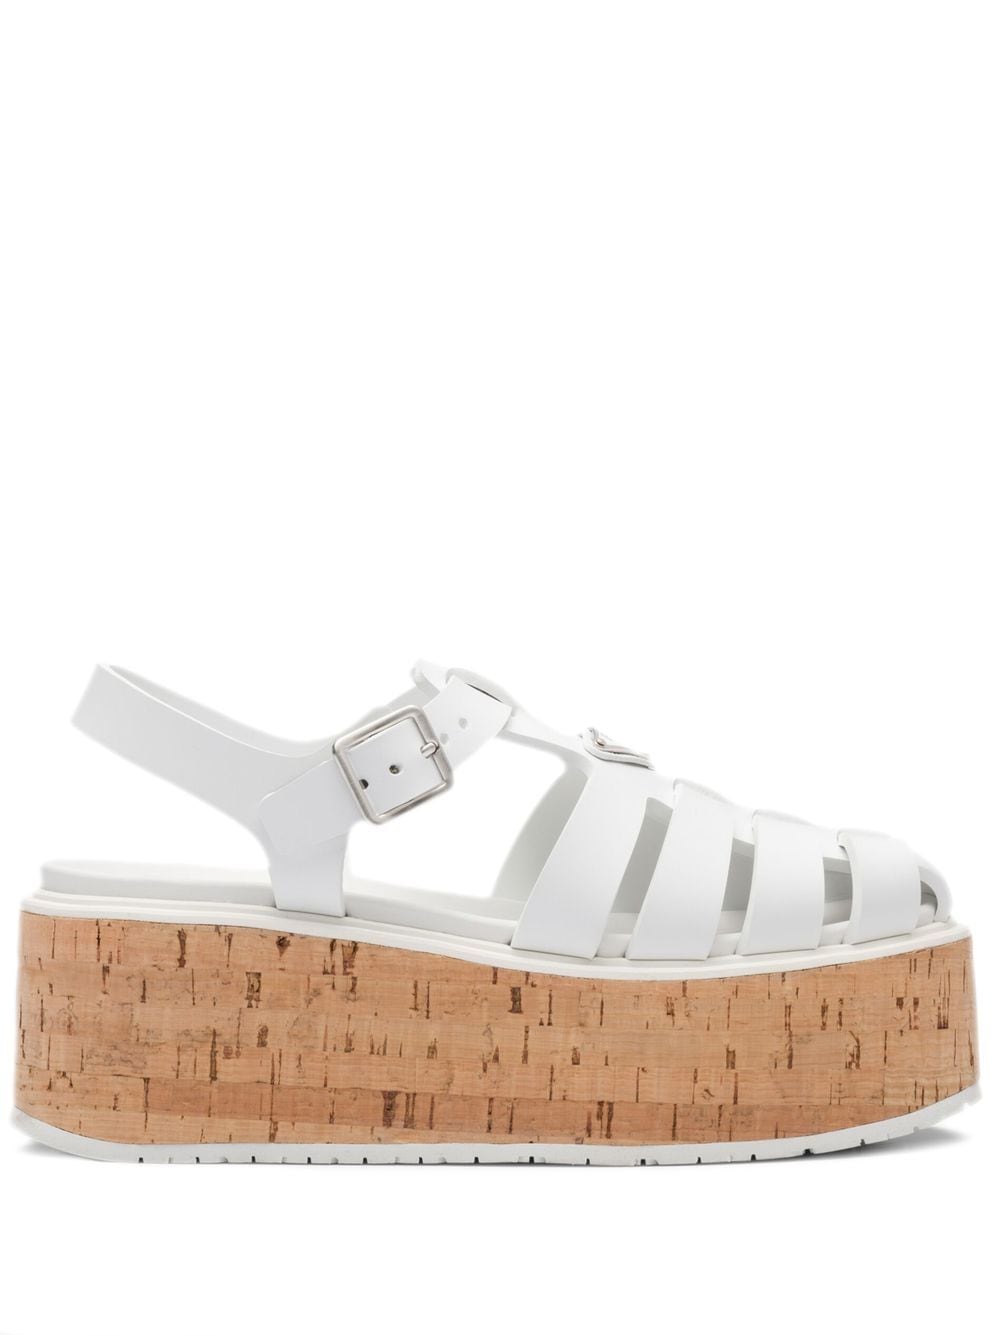 Prada platform wedge sandals - White